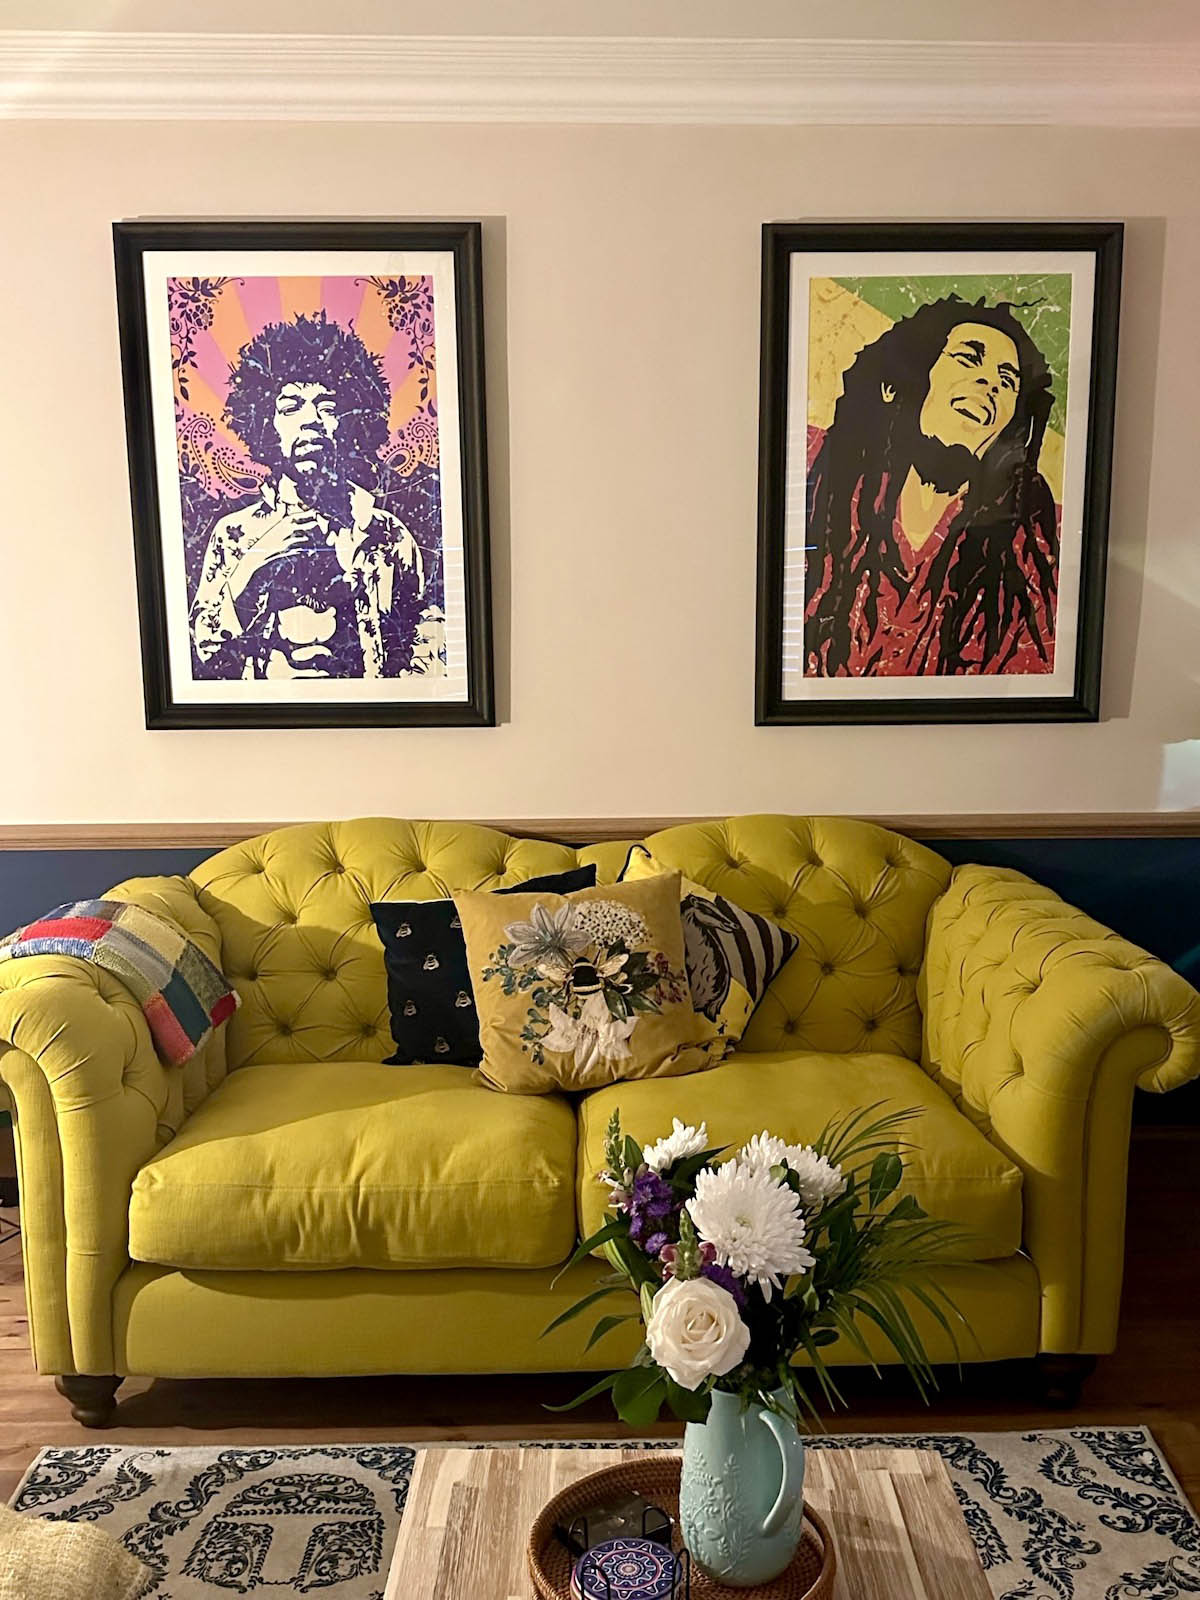 Jimi Hendrix and Bob Marley Pop Art painting prints By Kerwin